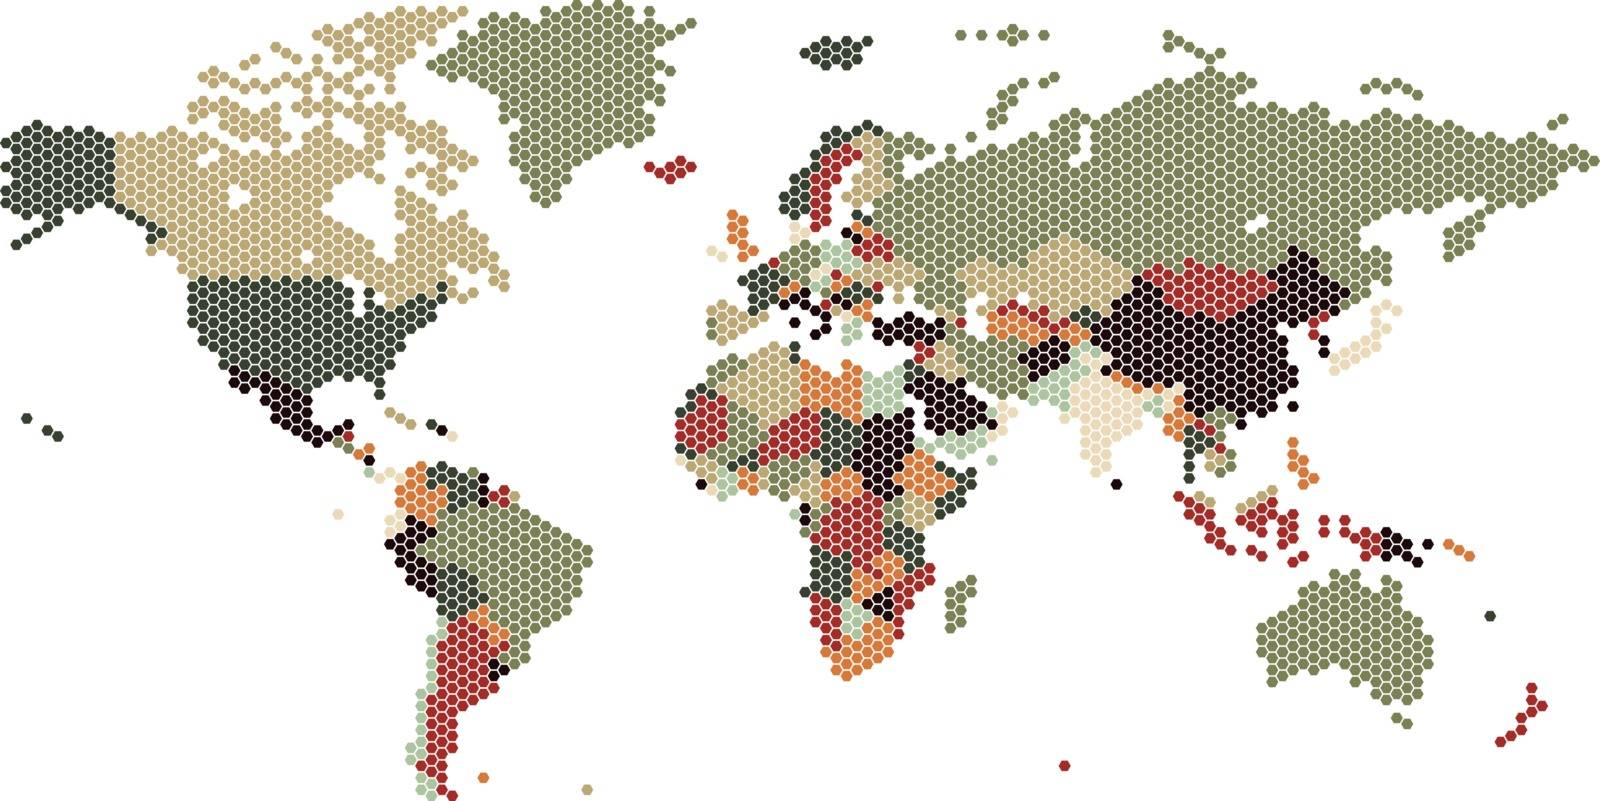 Dotted World map of hexagonal dots by ildogesto